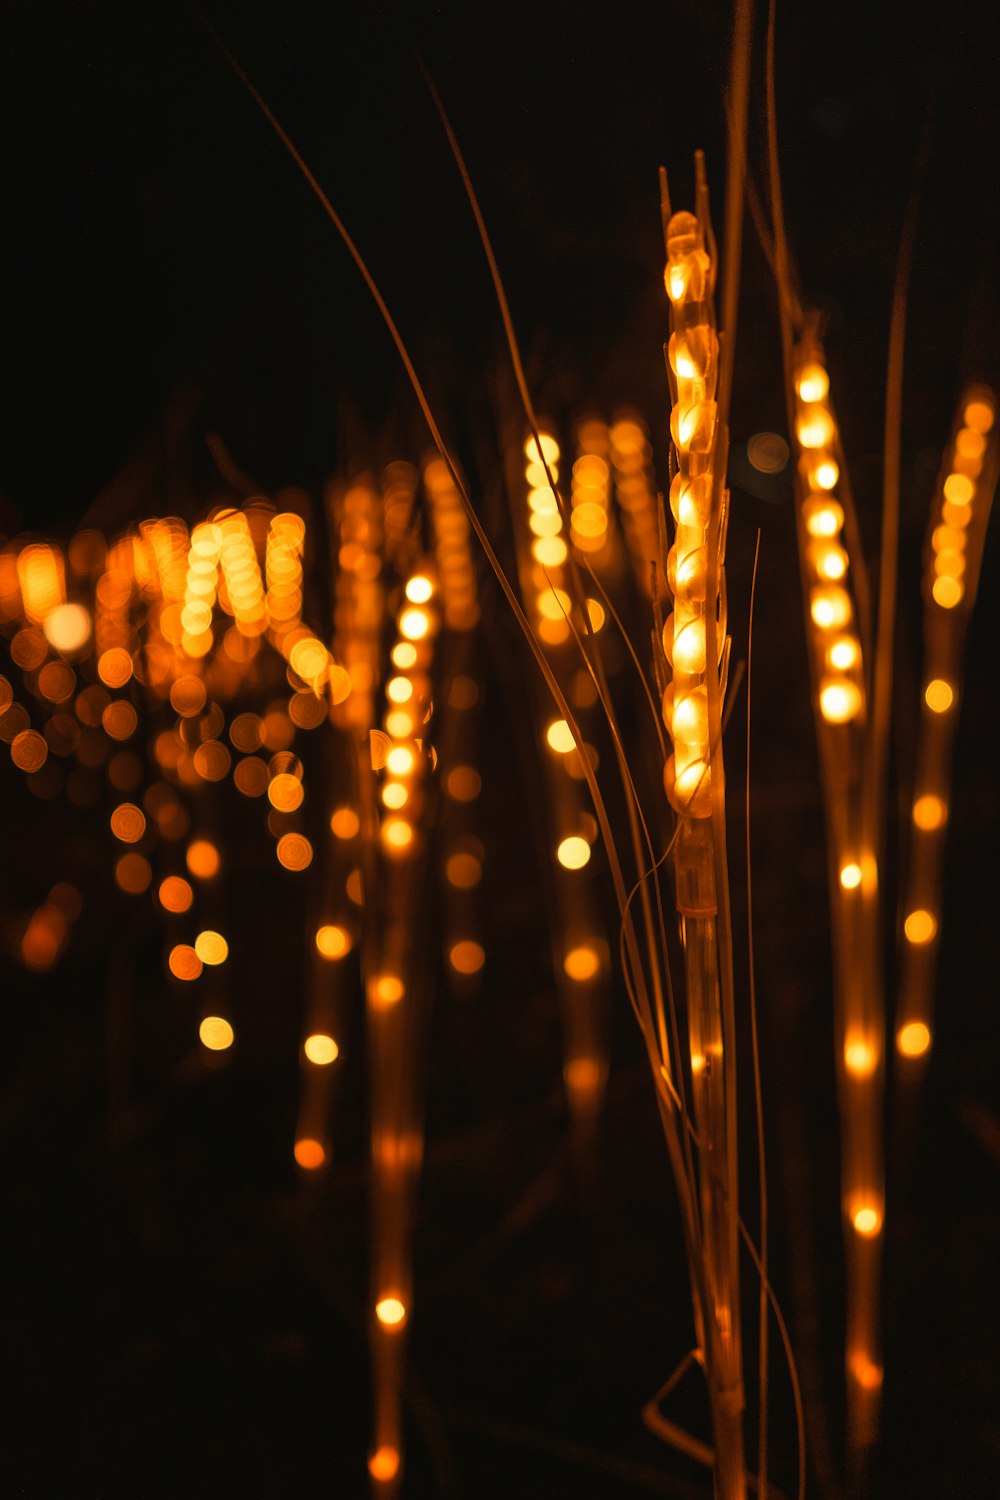 Yellow string lights during night time photo – Free Lighting Image on  Unsplash